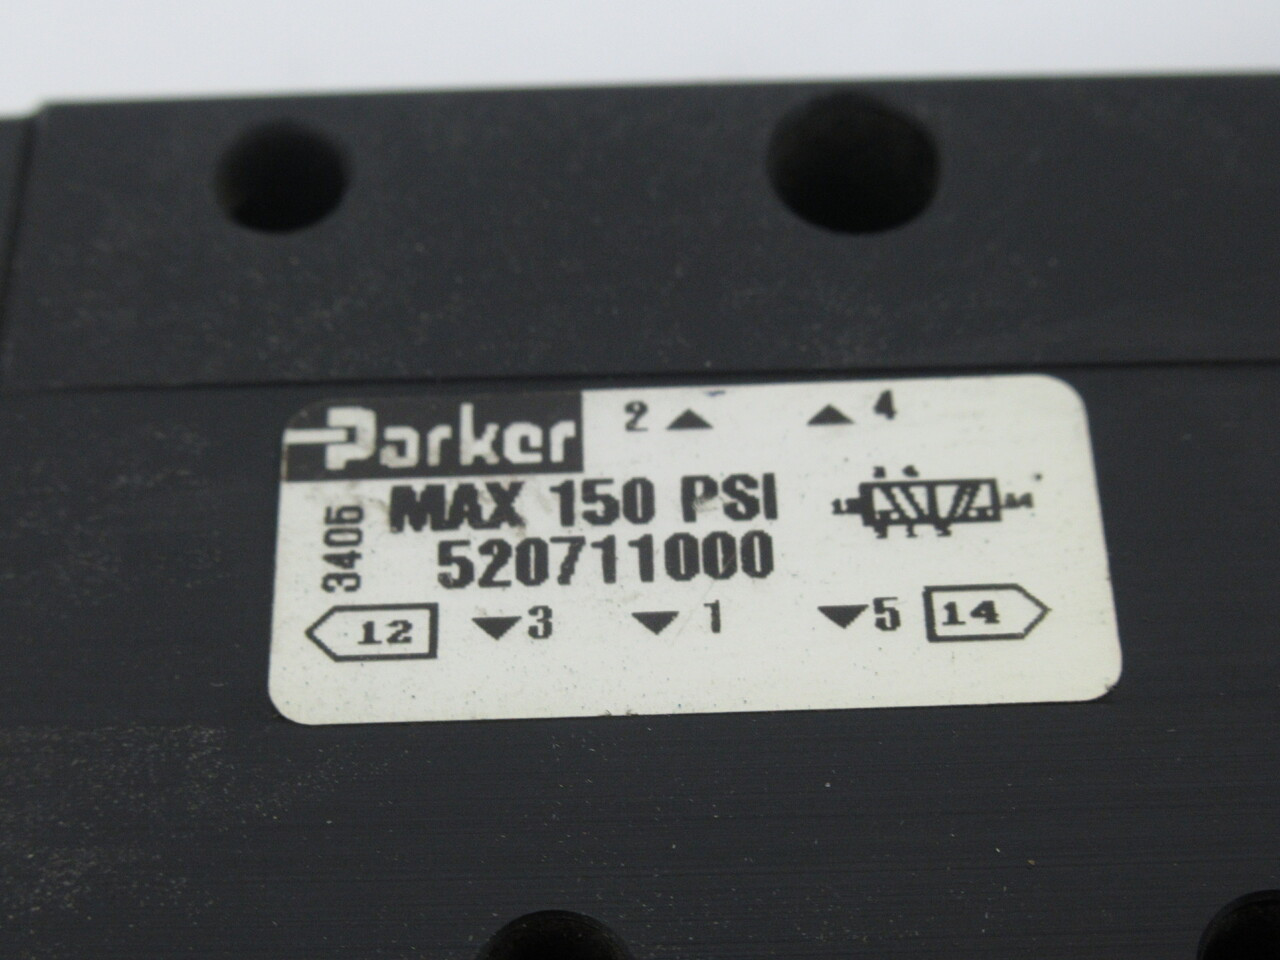 Parker 520711000 4/2 Manual Air Control Valve 1/4" NPT 150 PSI .83cfm USED